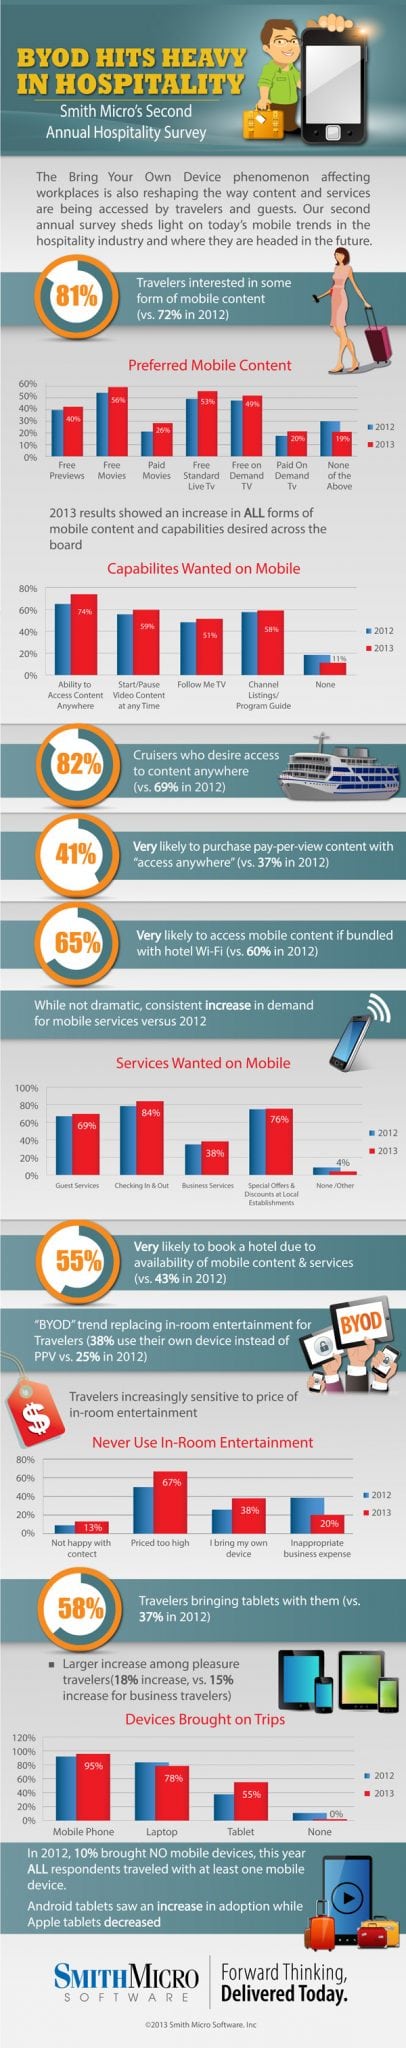 Hospitality-Survey-2013-Infographic